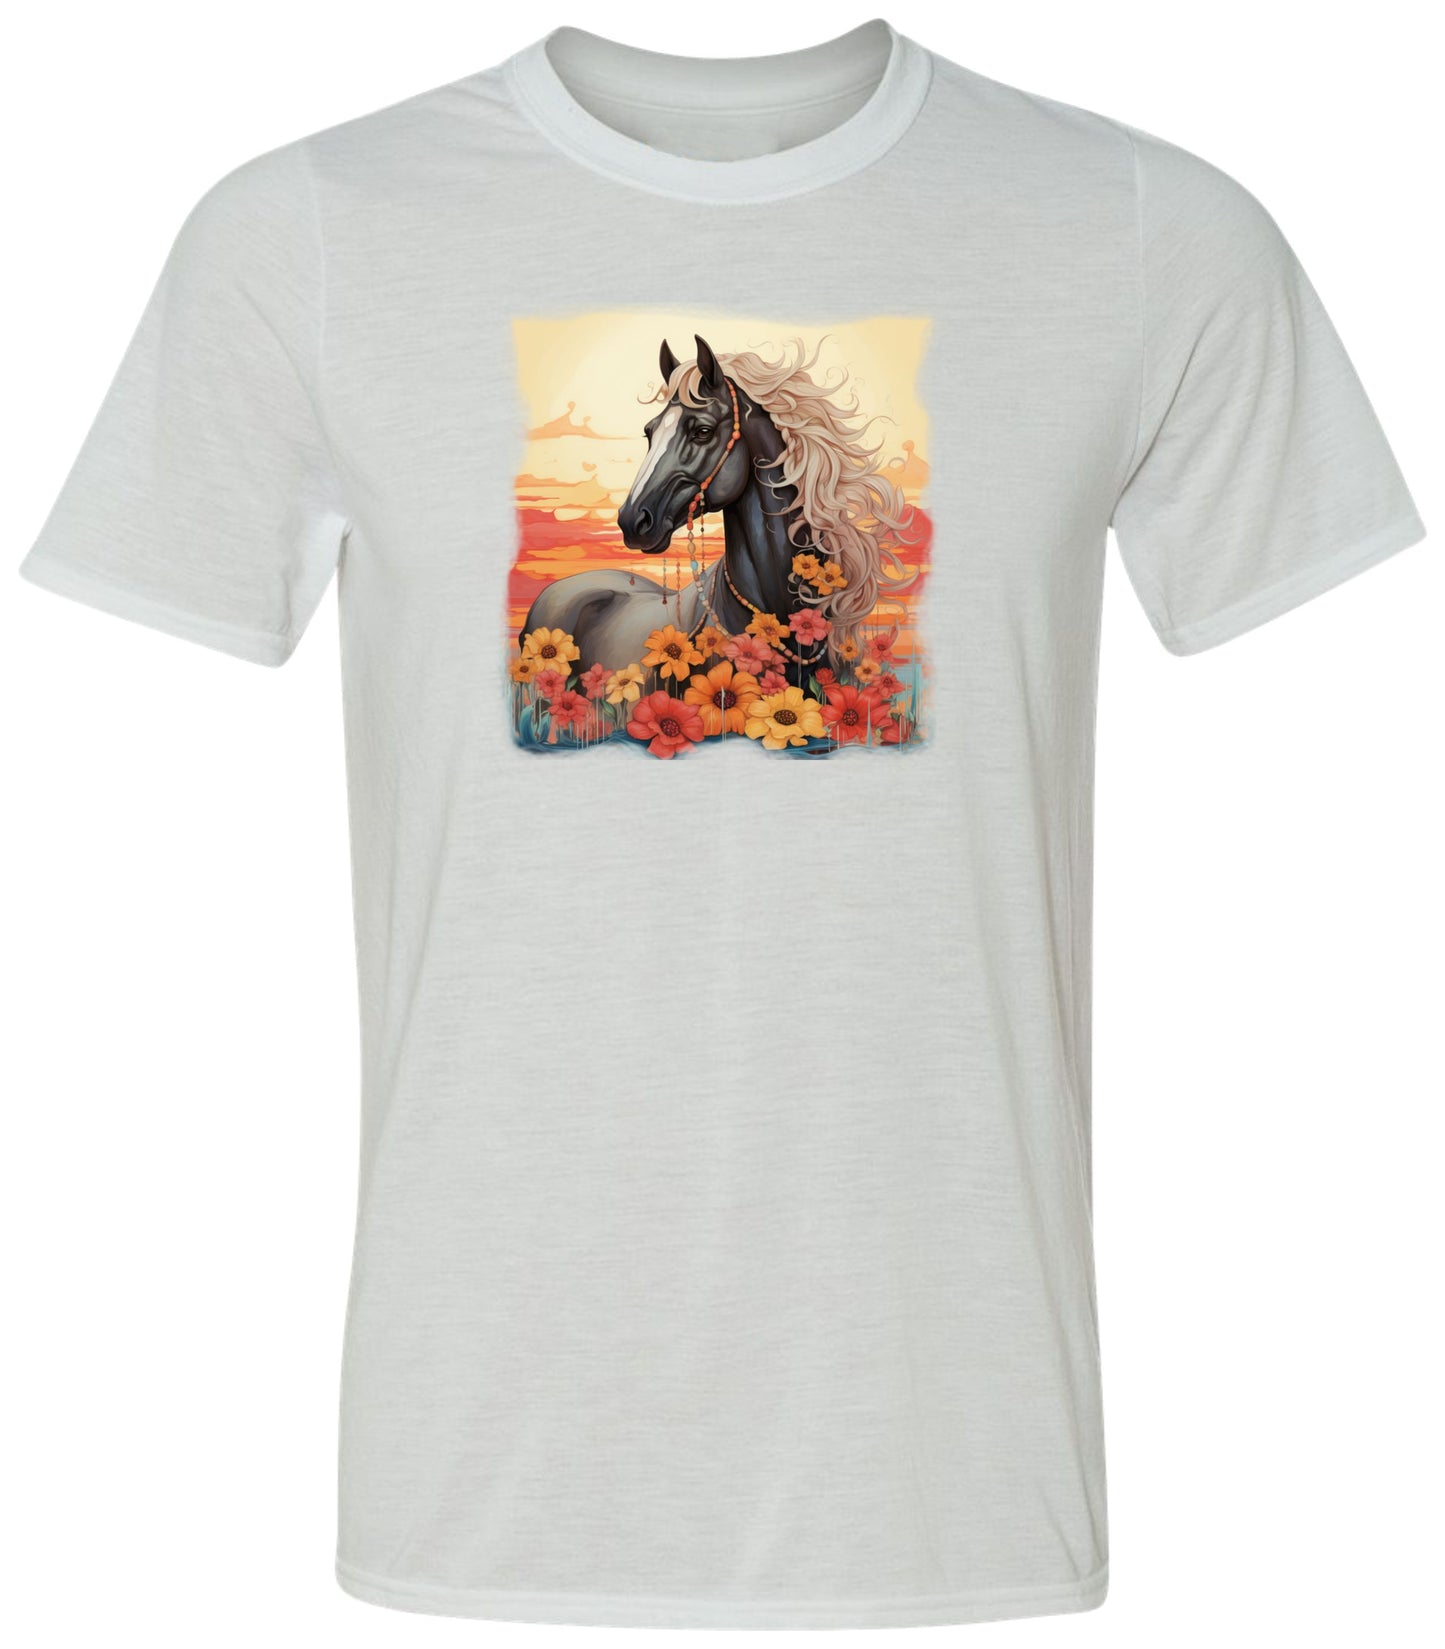 74SLCP Horse and Flowers Short Sleeve Shirt Wildlife Shirt Outdoor Shirt Lake Shirt Casual Shirt Beach Shirt